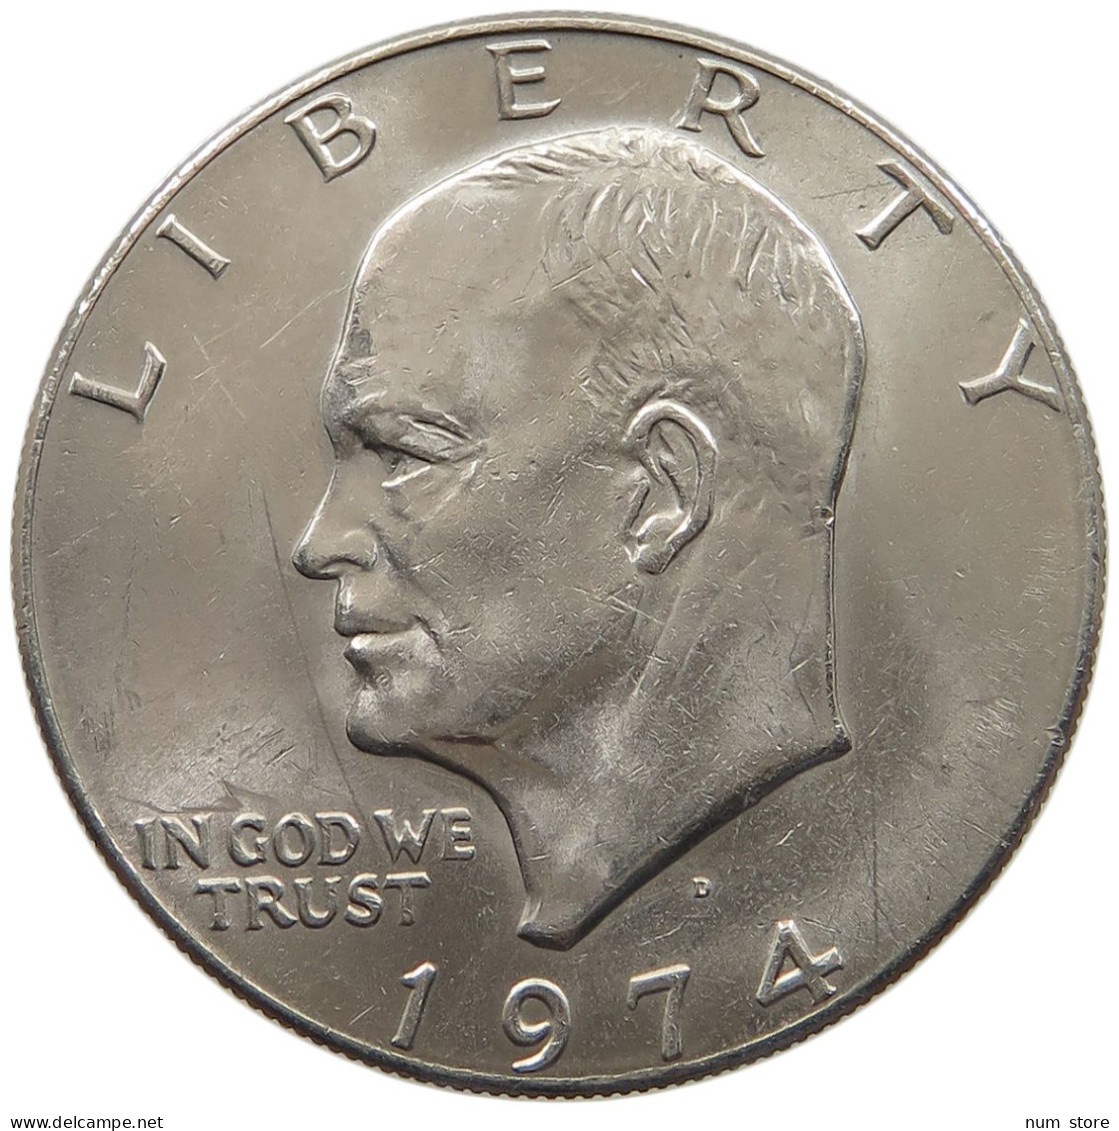 UNITED STATES OF AMERICA DOLLAR 1974 D EISENHOWER #c035 0151 - 1971-1978: Eisenhower